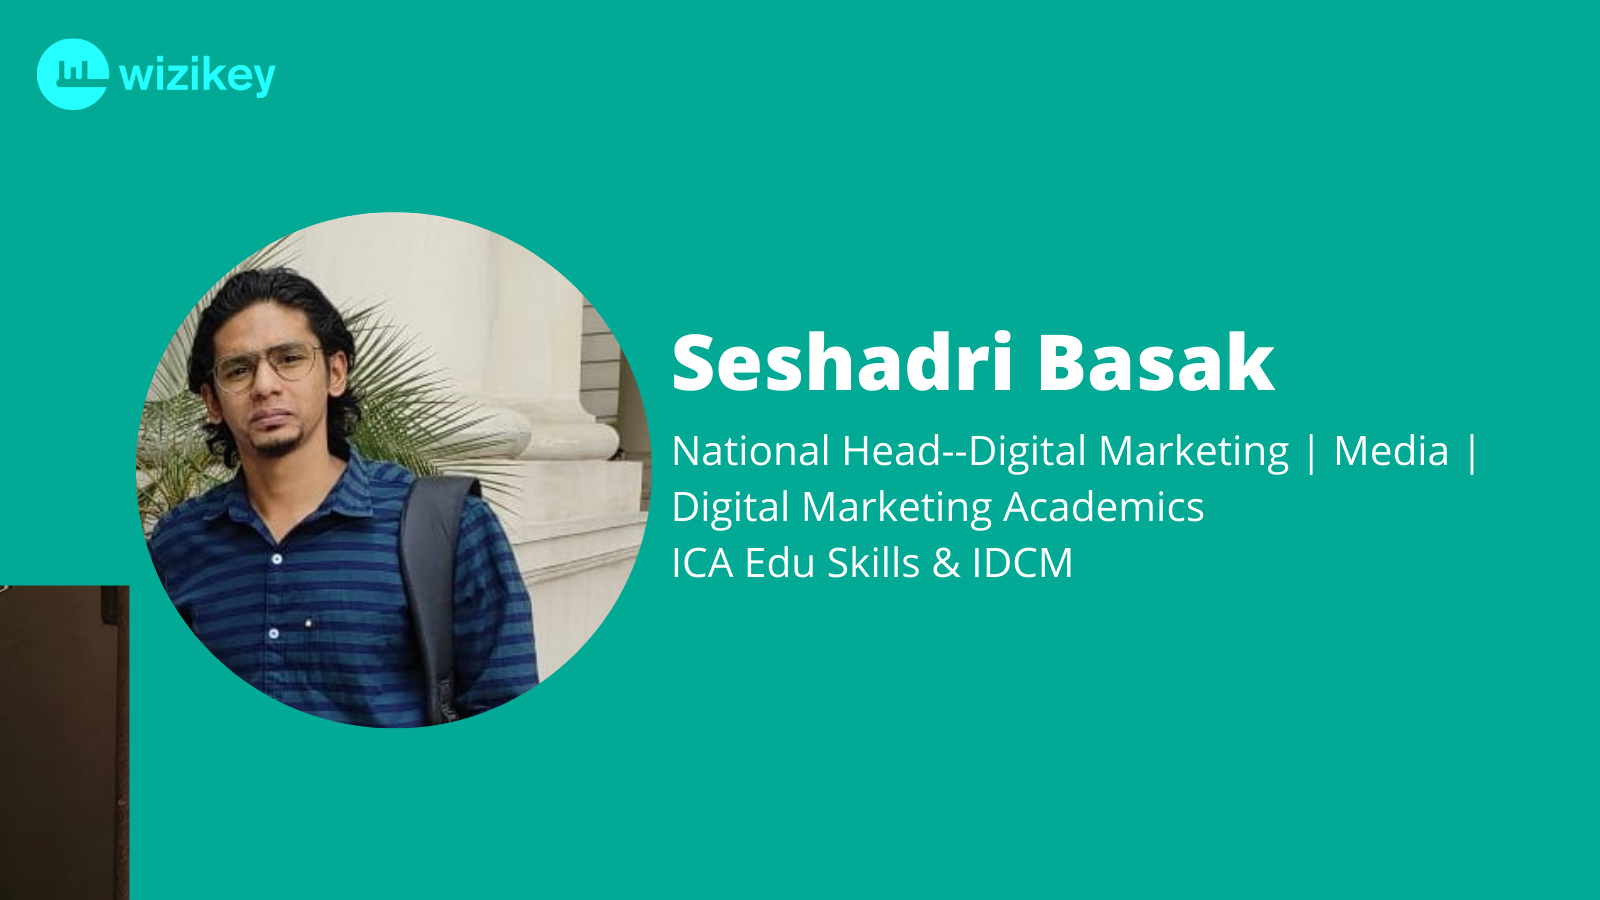 Data metrics are most important: Seshadri from ICA Edu Skills & IDCM